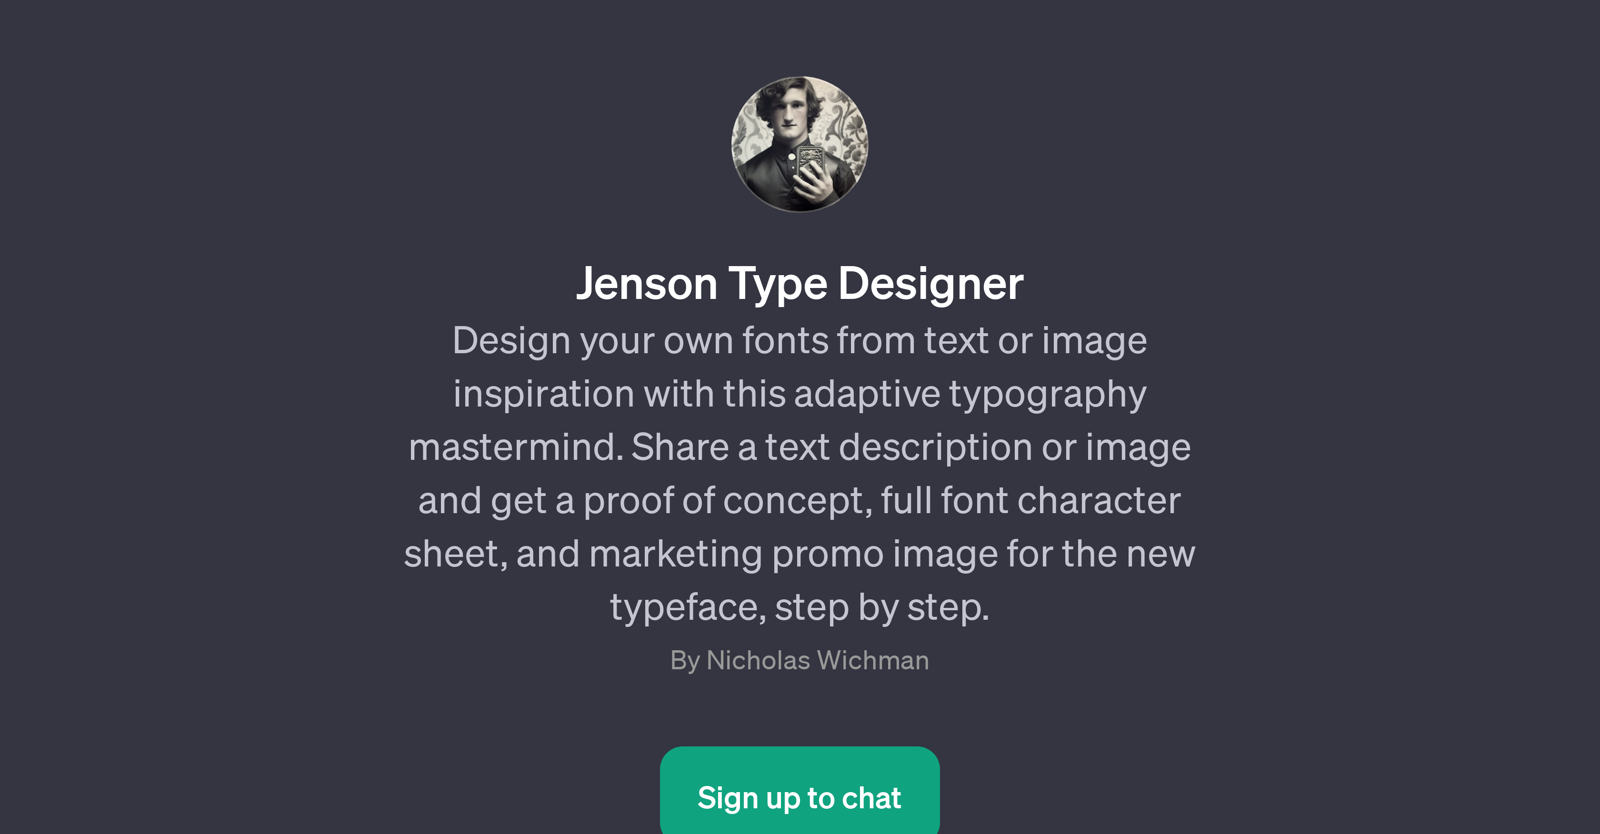 Jenson Type Designer website